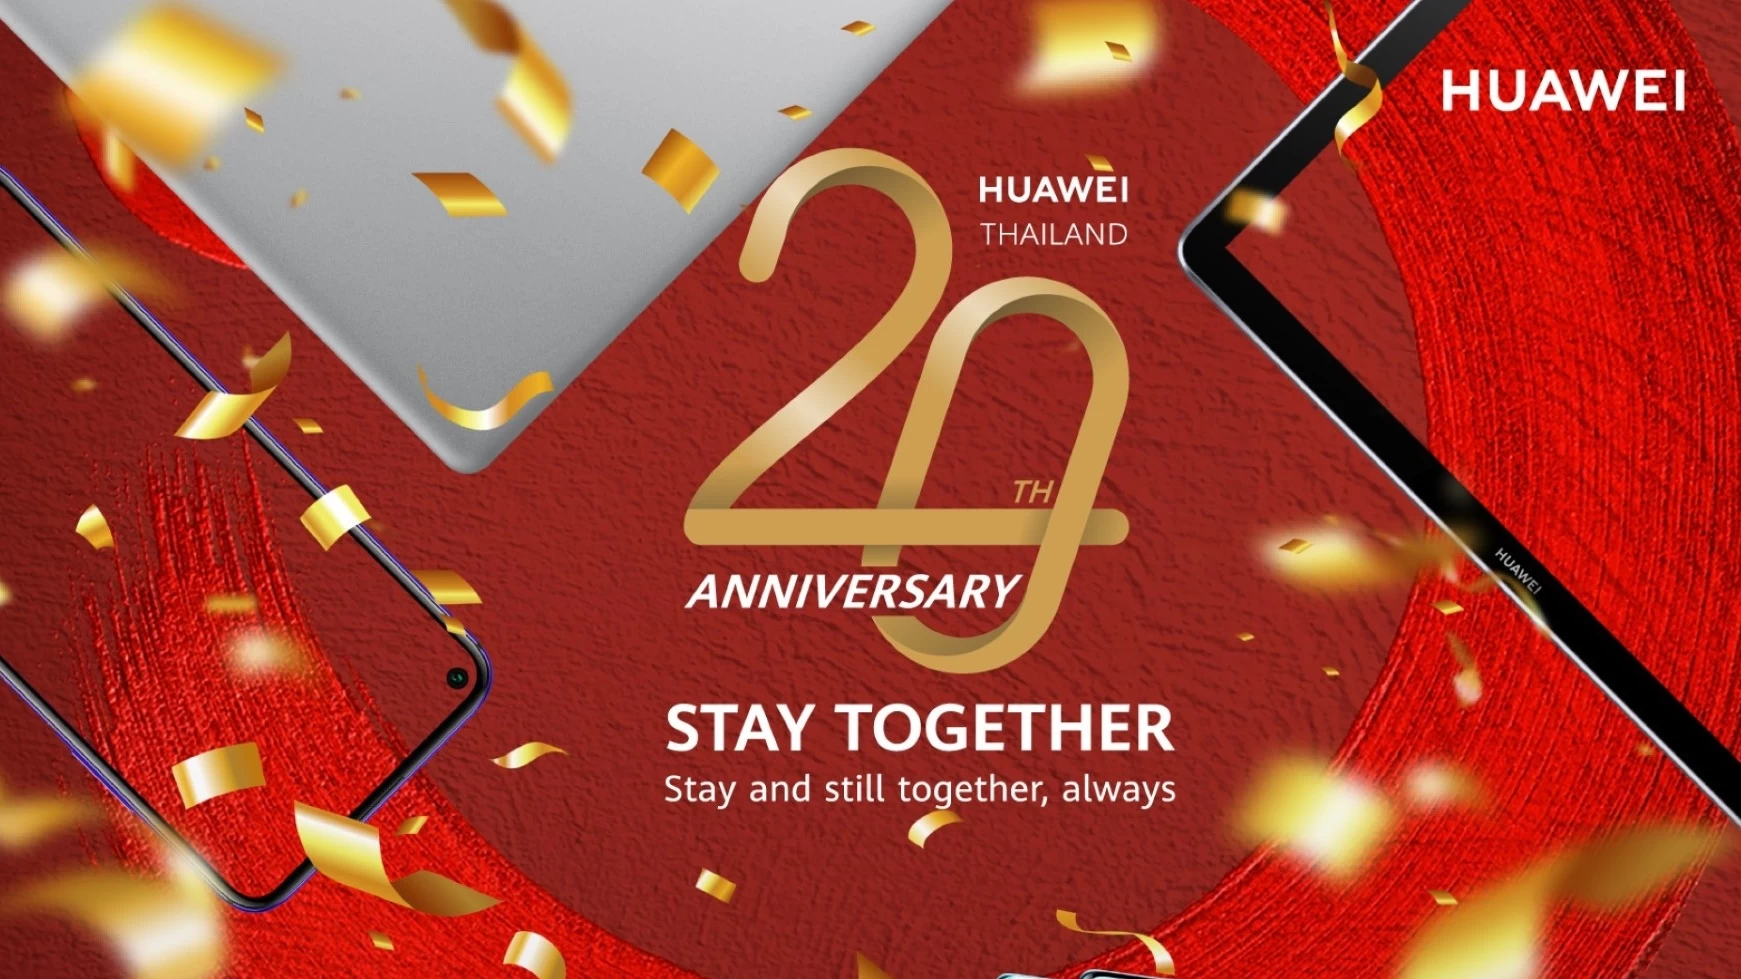 Huawei Thailand 20th Anniversary | Huawei nova 5T | หัวเว่ยจัดแคมเปญ “Huawei Thailand 20th Anniversary” ฉลองครบรอบ 20 ปี จัดโปรแทนคำขอบคุณ